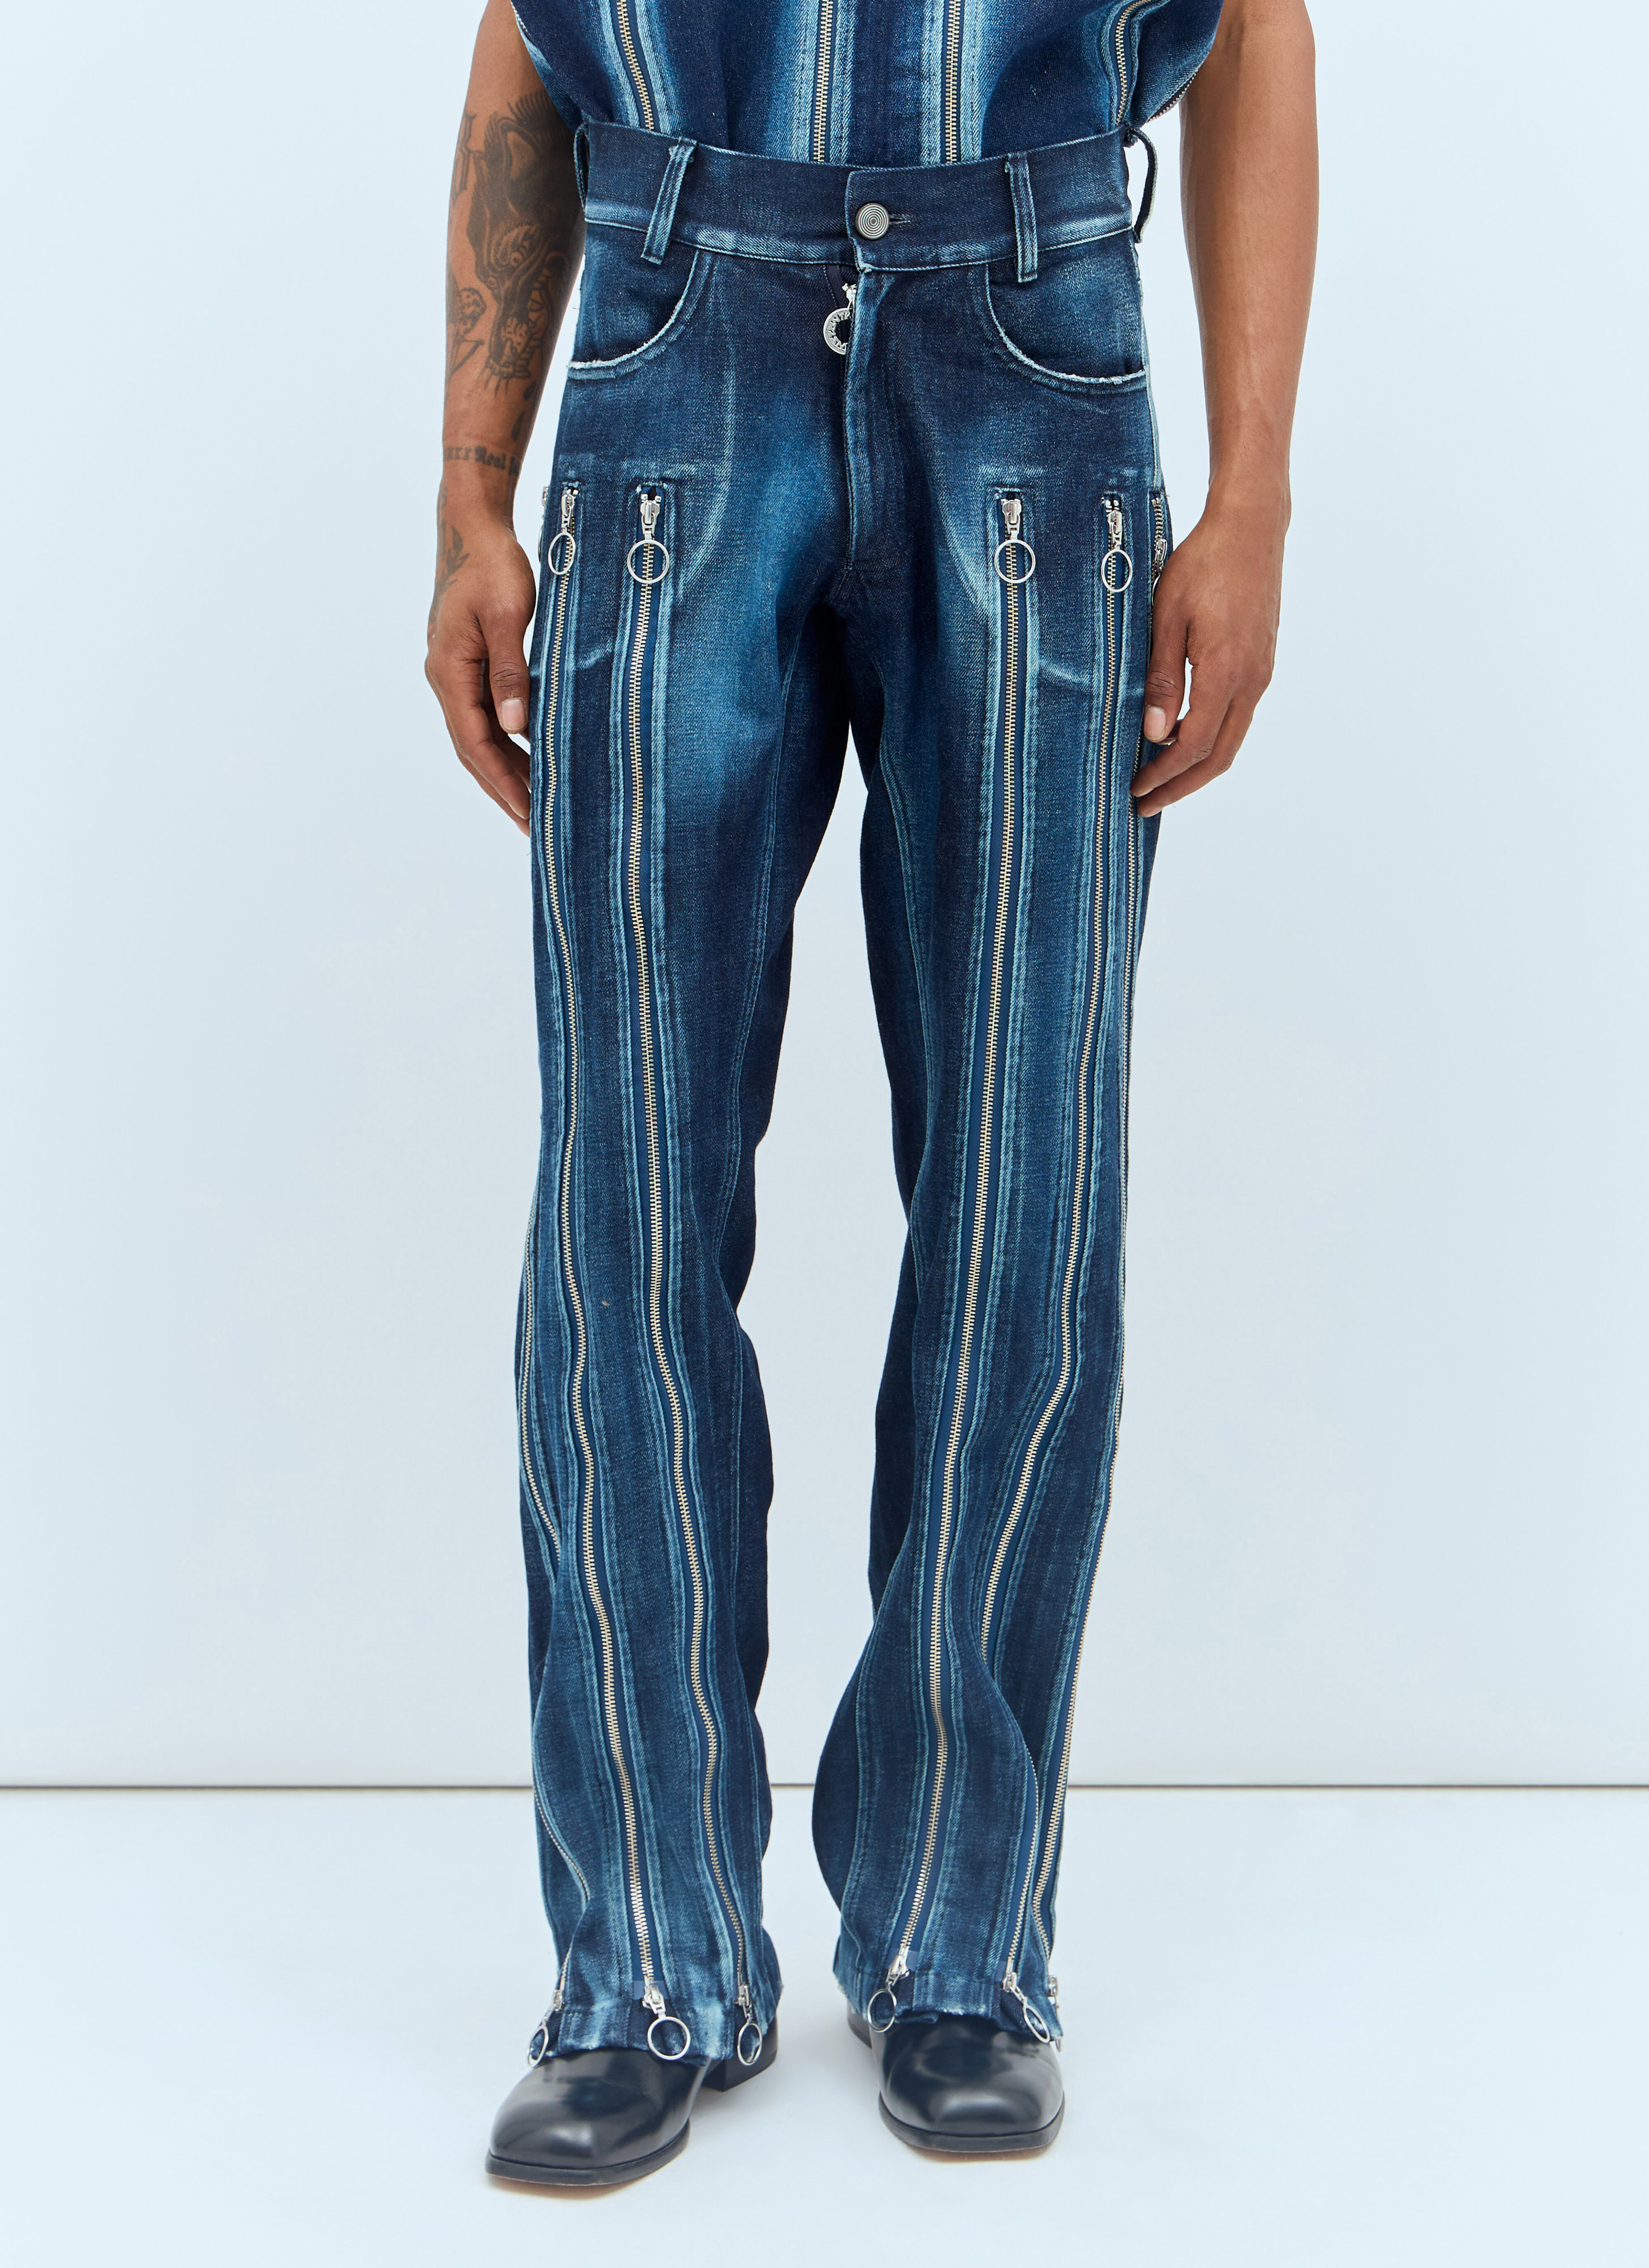 Kusikohc Adjustable-Fit Zip Jeans Grey kus0156005